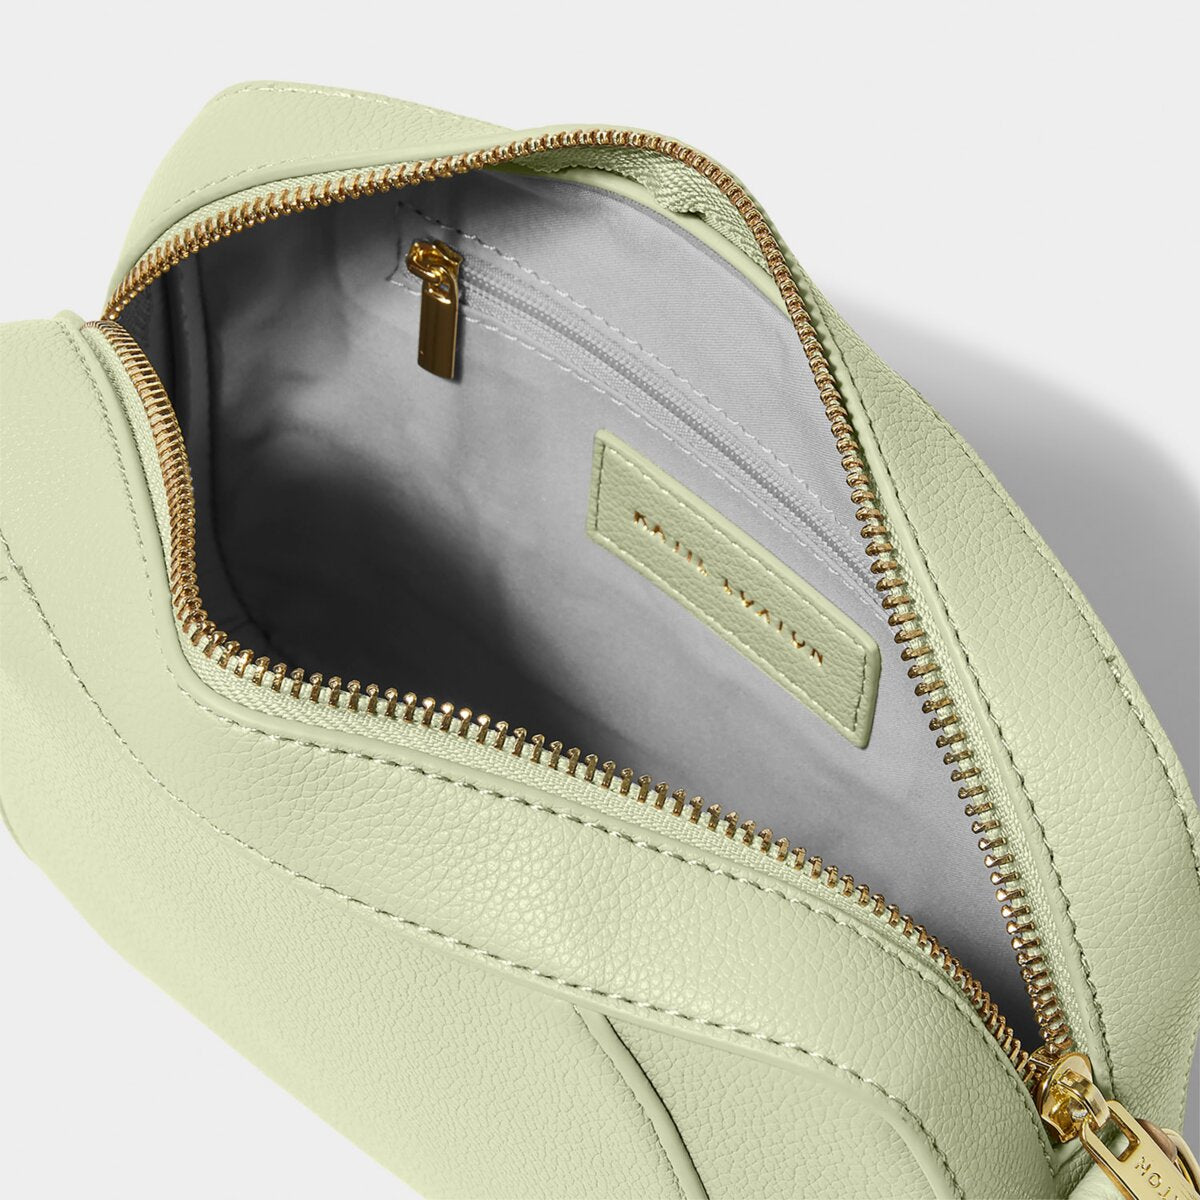 interior shot of a Crossbody handbag in soft sage greeen, highlighting the internal zipped pouch